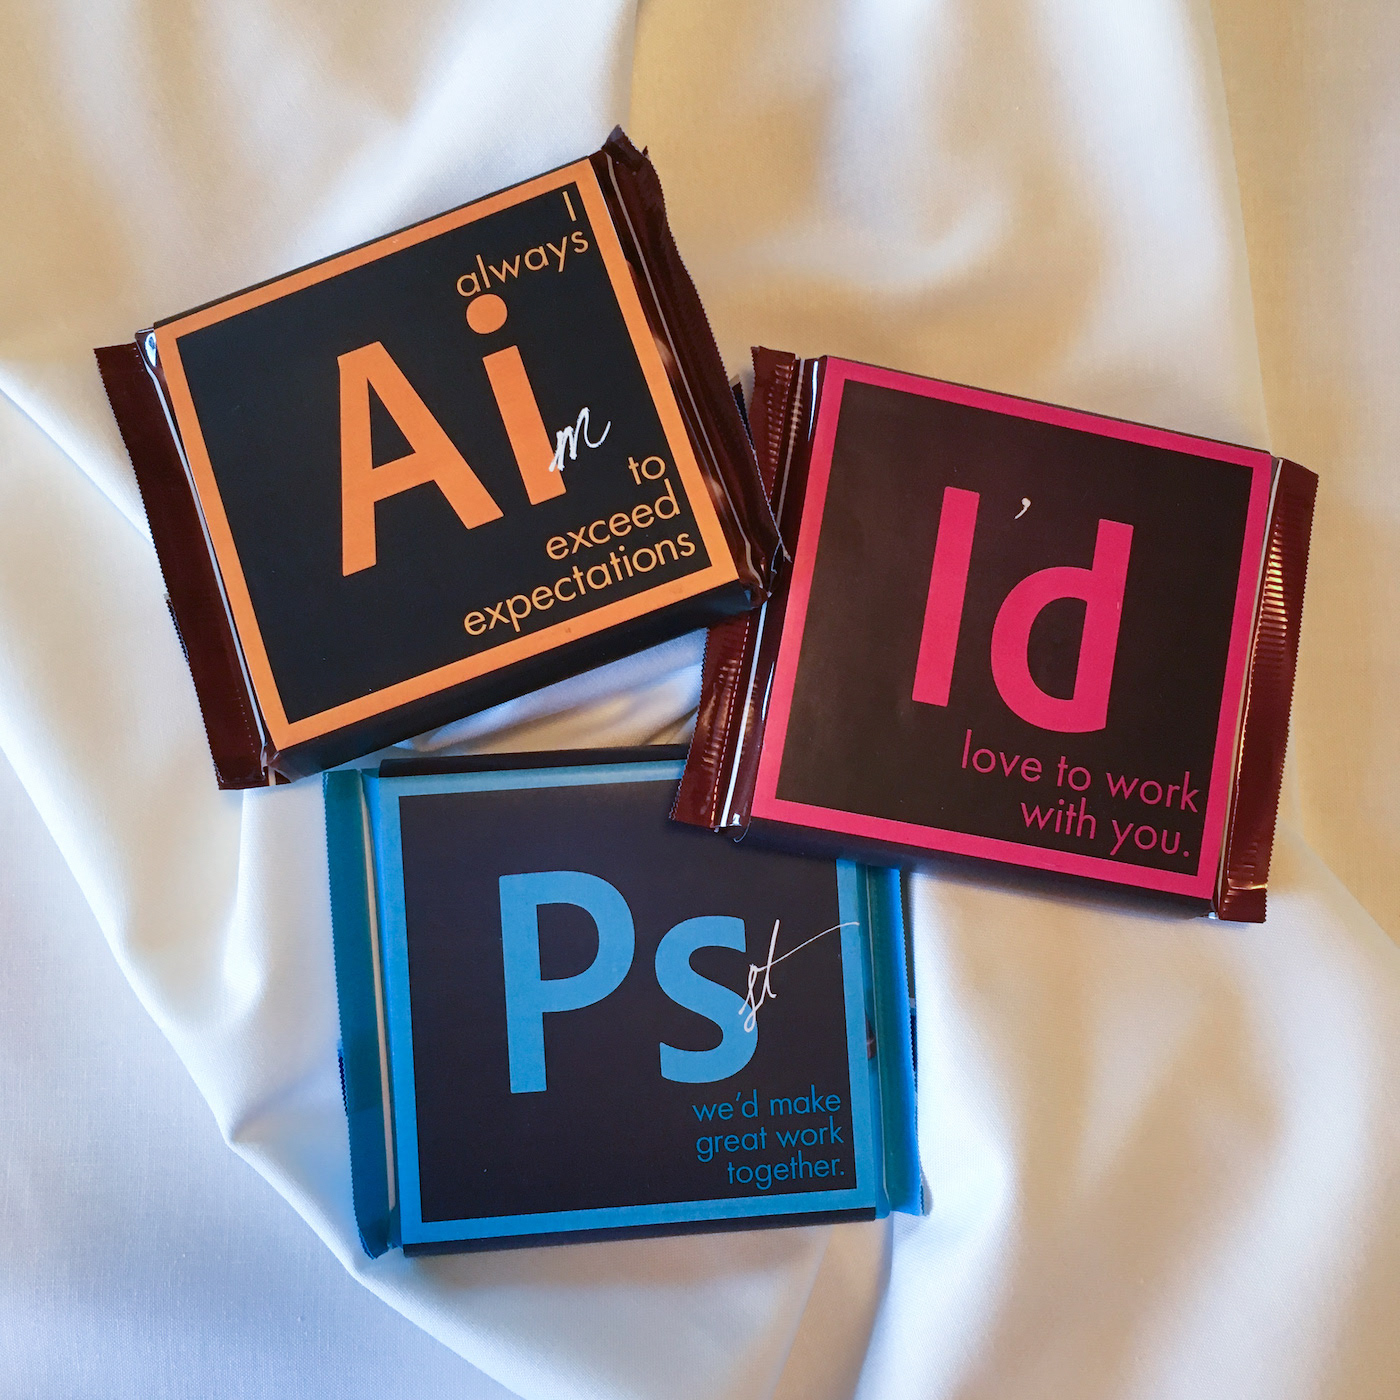 Adobe Suite Chocolate Bars - Illustrator, Photoshop, InDesign